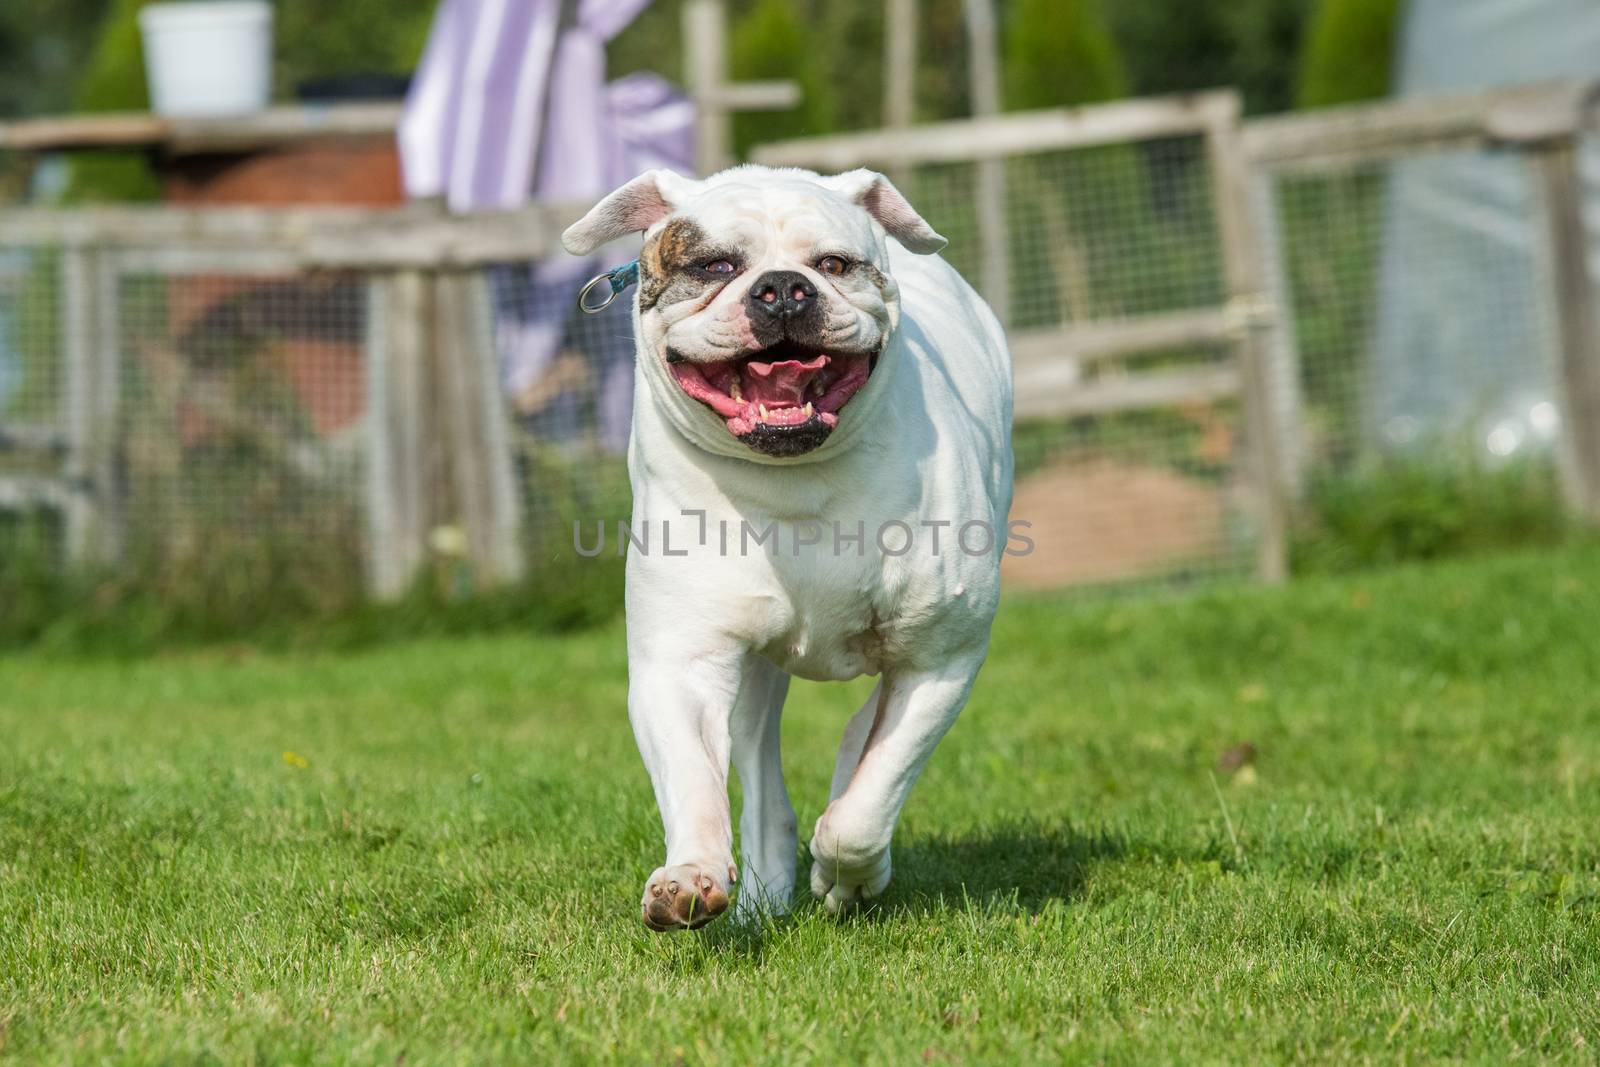 White coat American Bulldog dog in running on grass in the yard